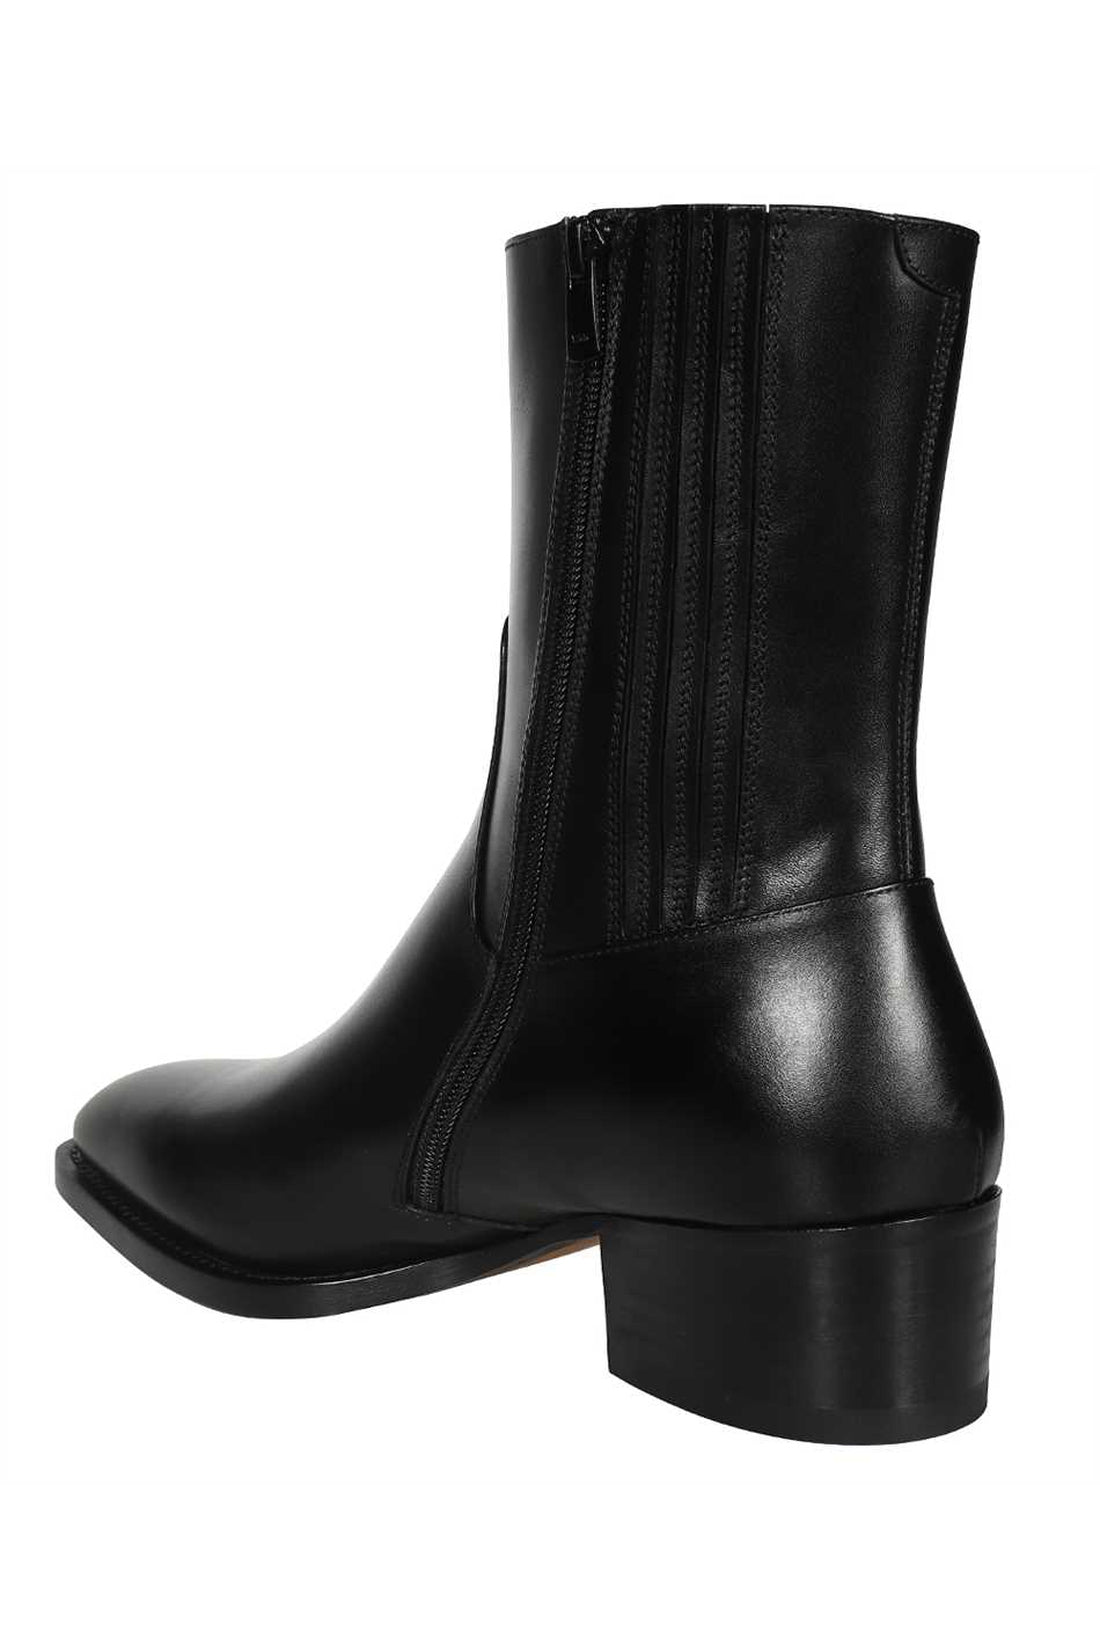 Dsquared2-OUTLET-SALE-Pierre leather ankle boots-ARCHIVIST